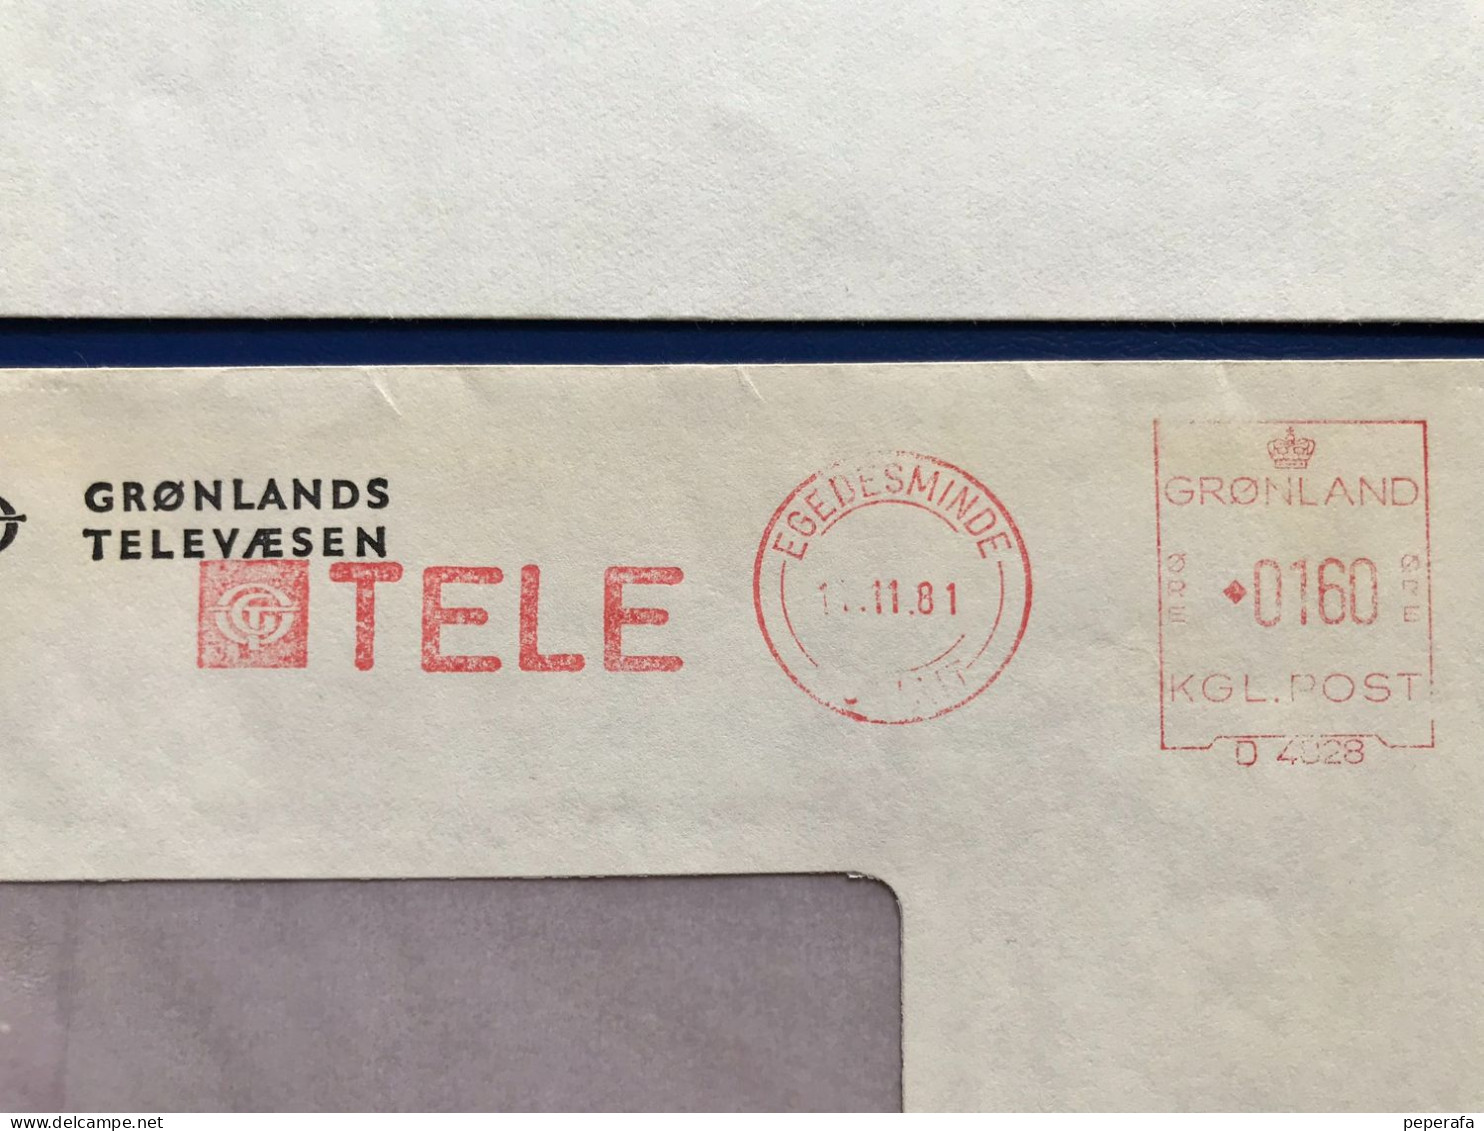 Denmark, Greenland GRØNLAND, 2 COVER POSTAGE METER, FRANQUEO MECÁNICO (FRANCOFILIA 2) - Postmarks